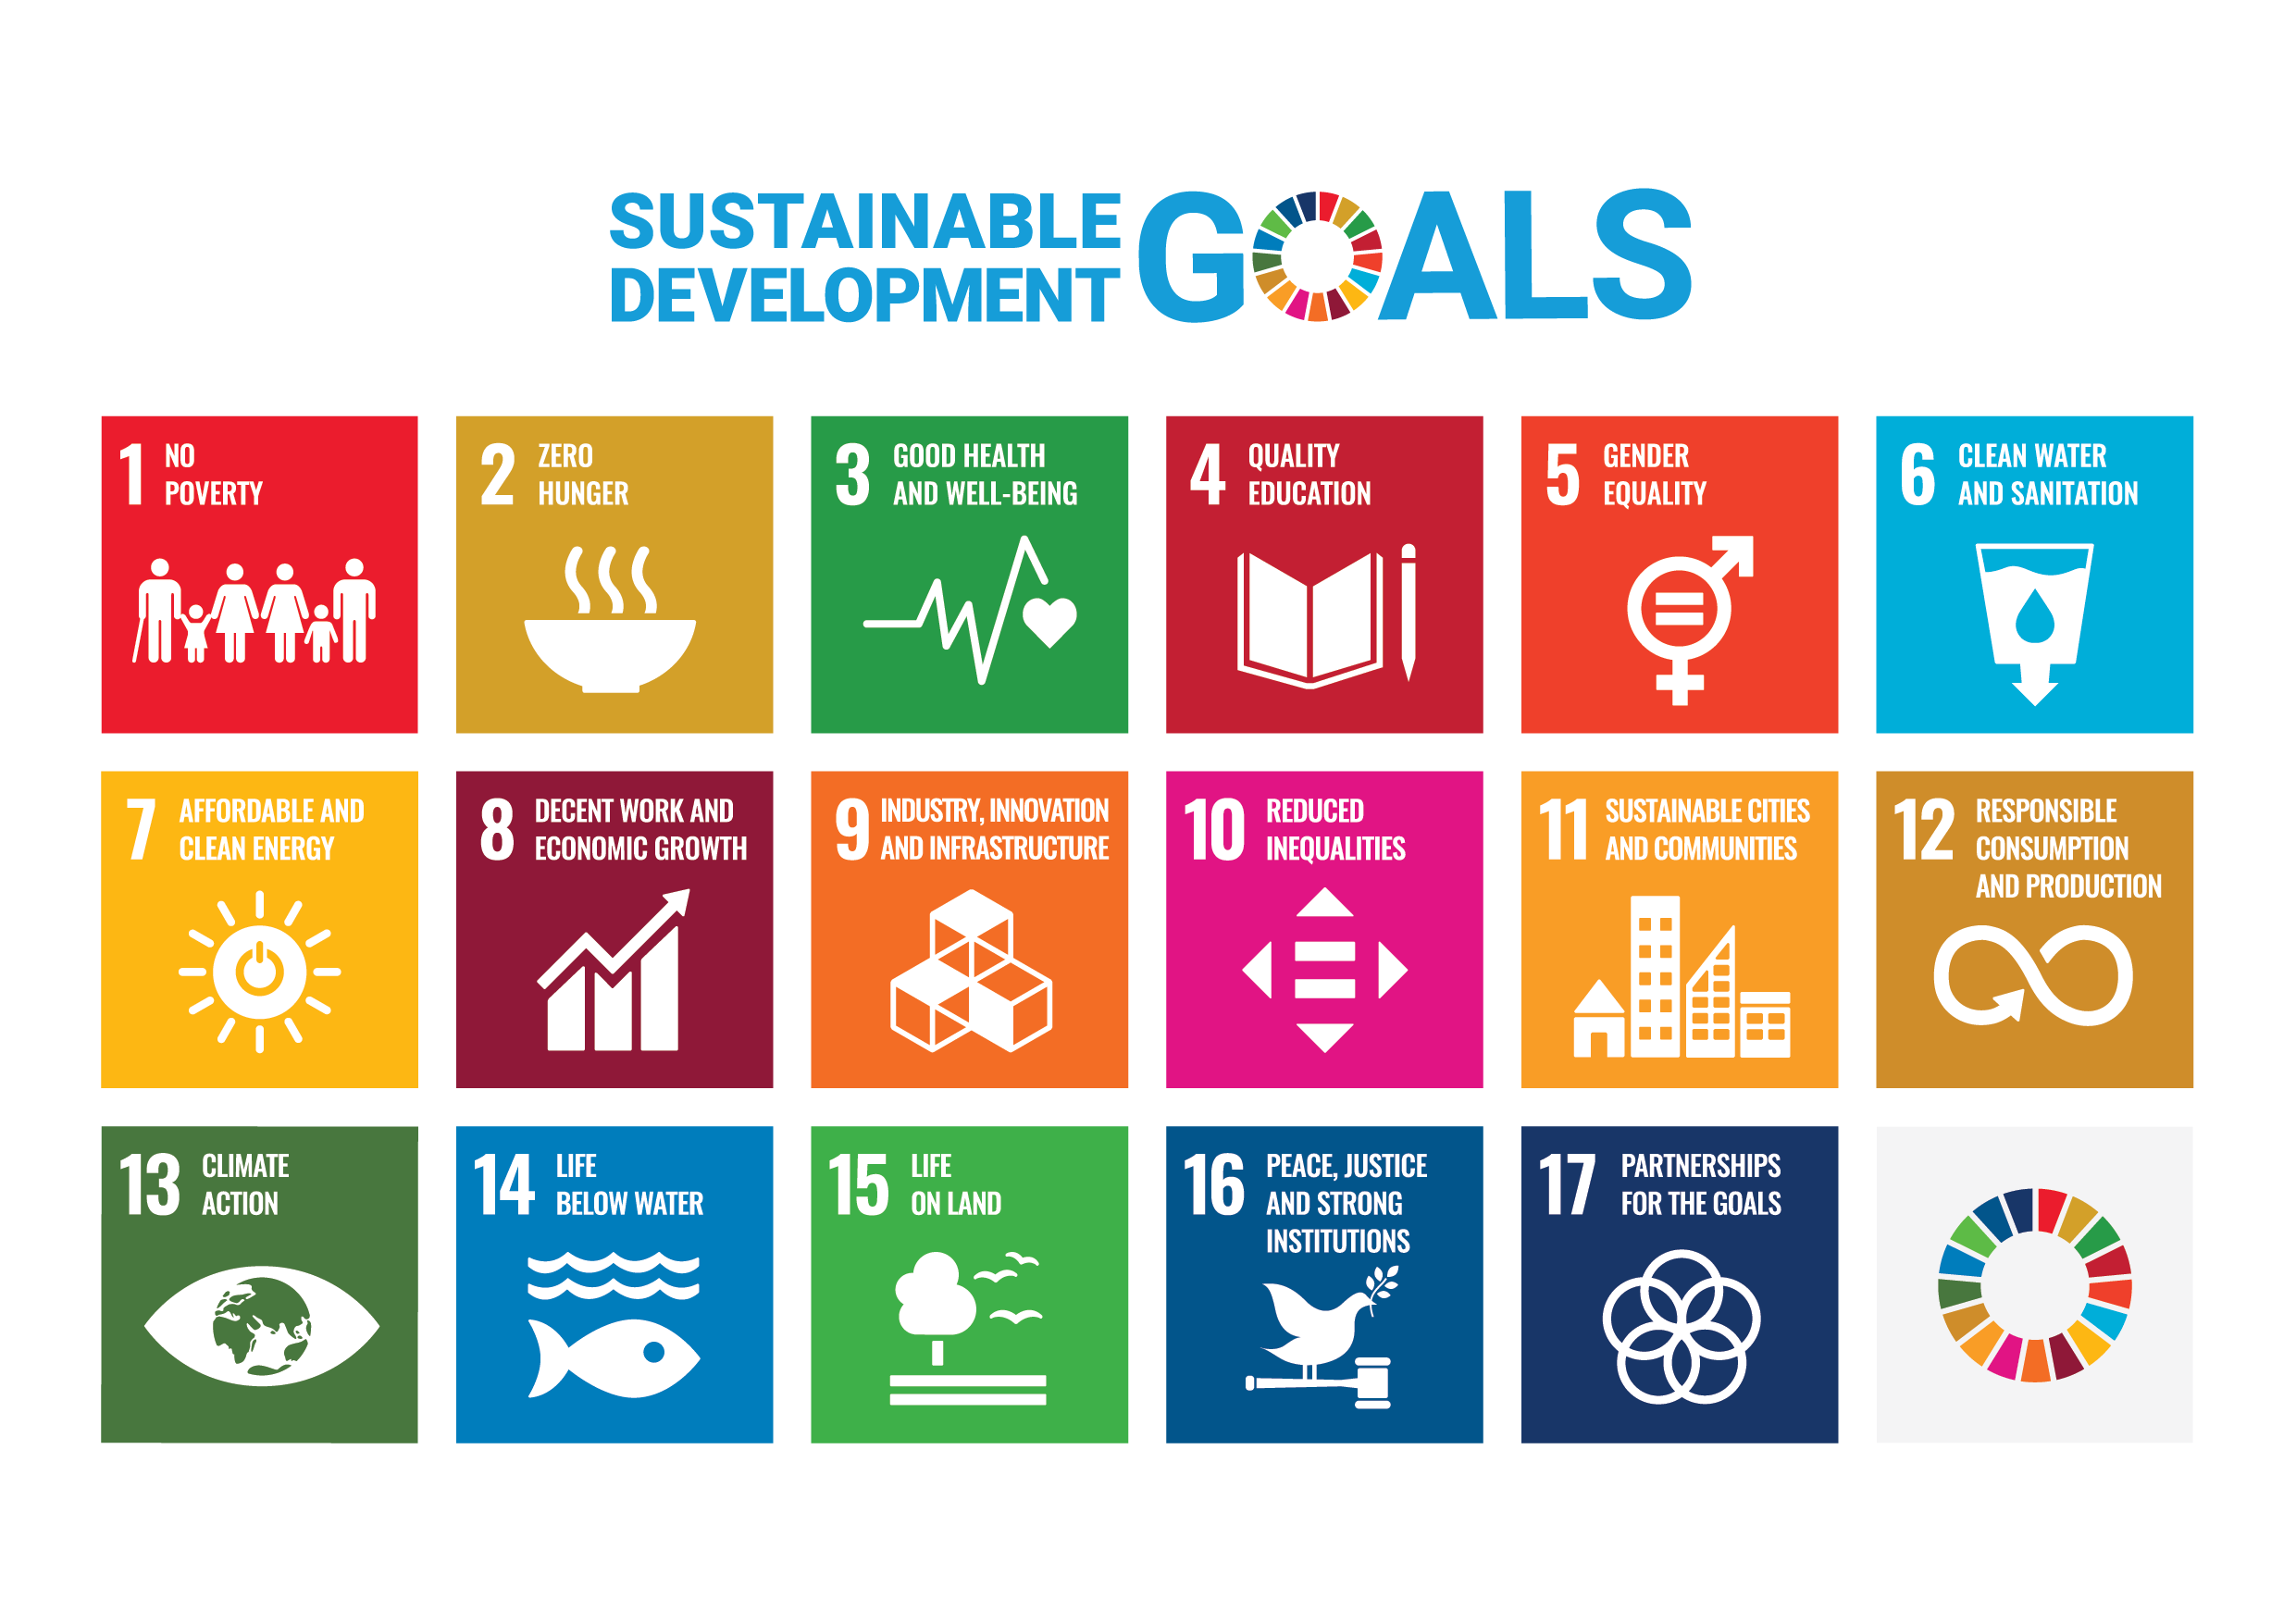 Sustainable Development Goals poster.